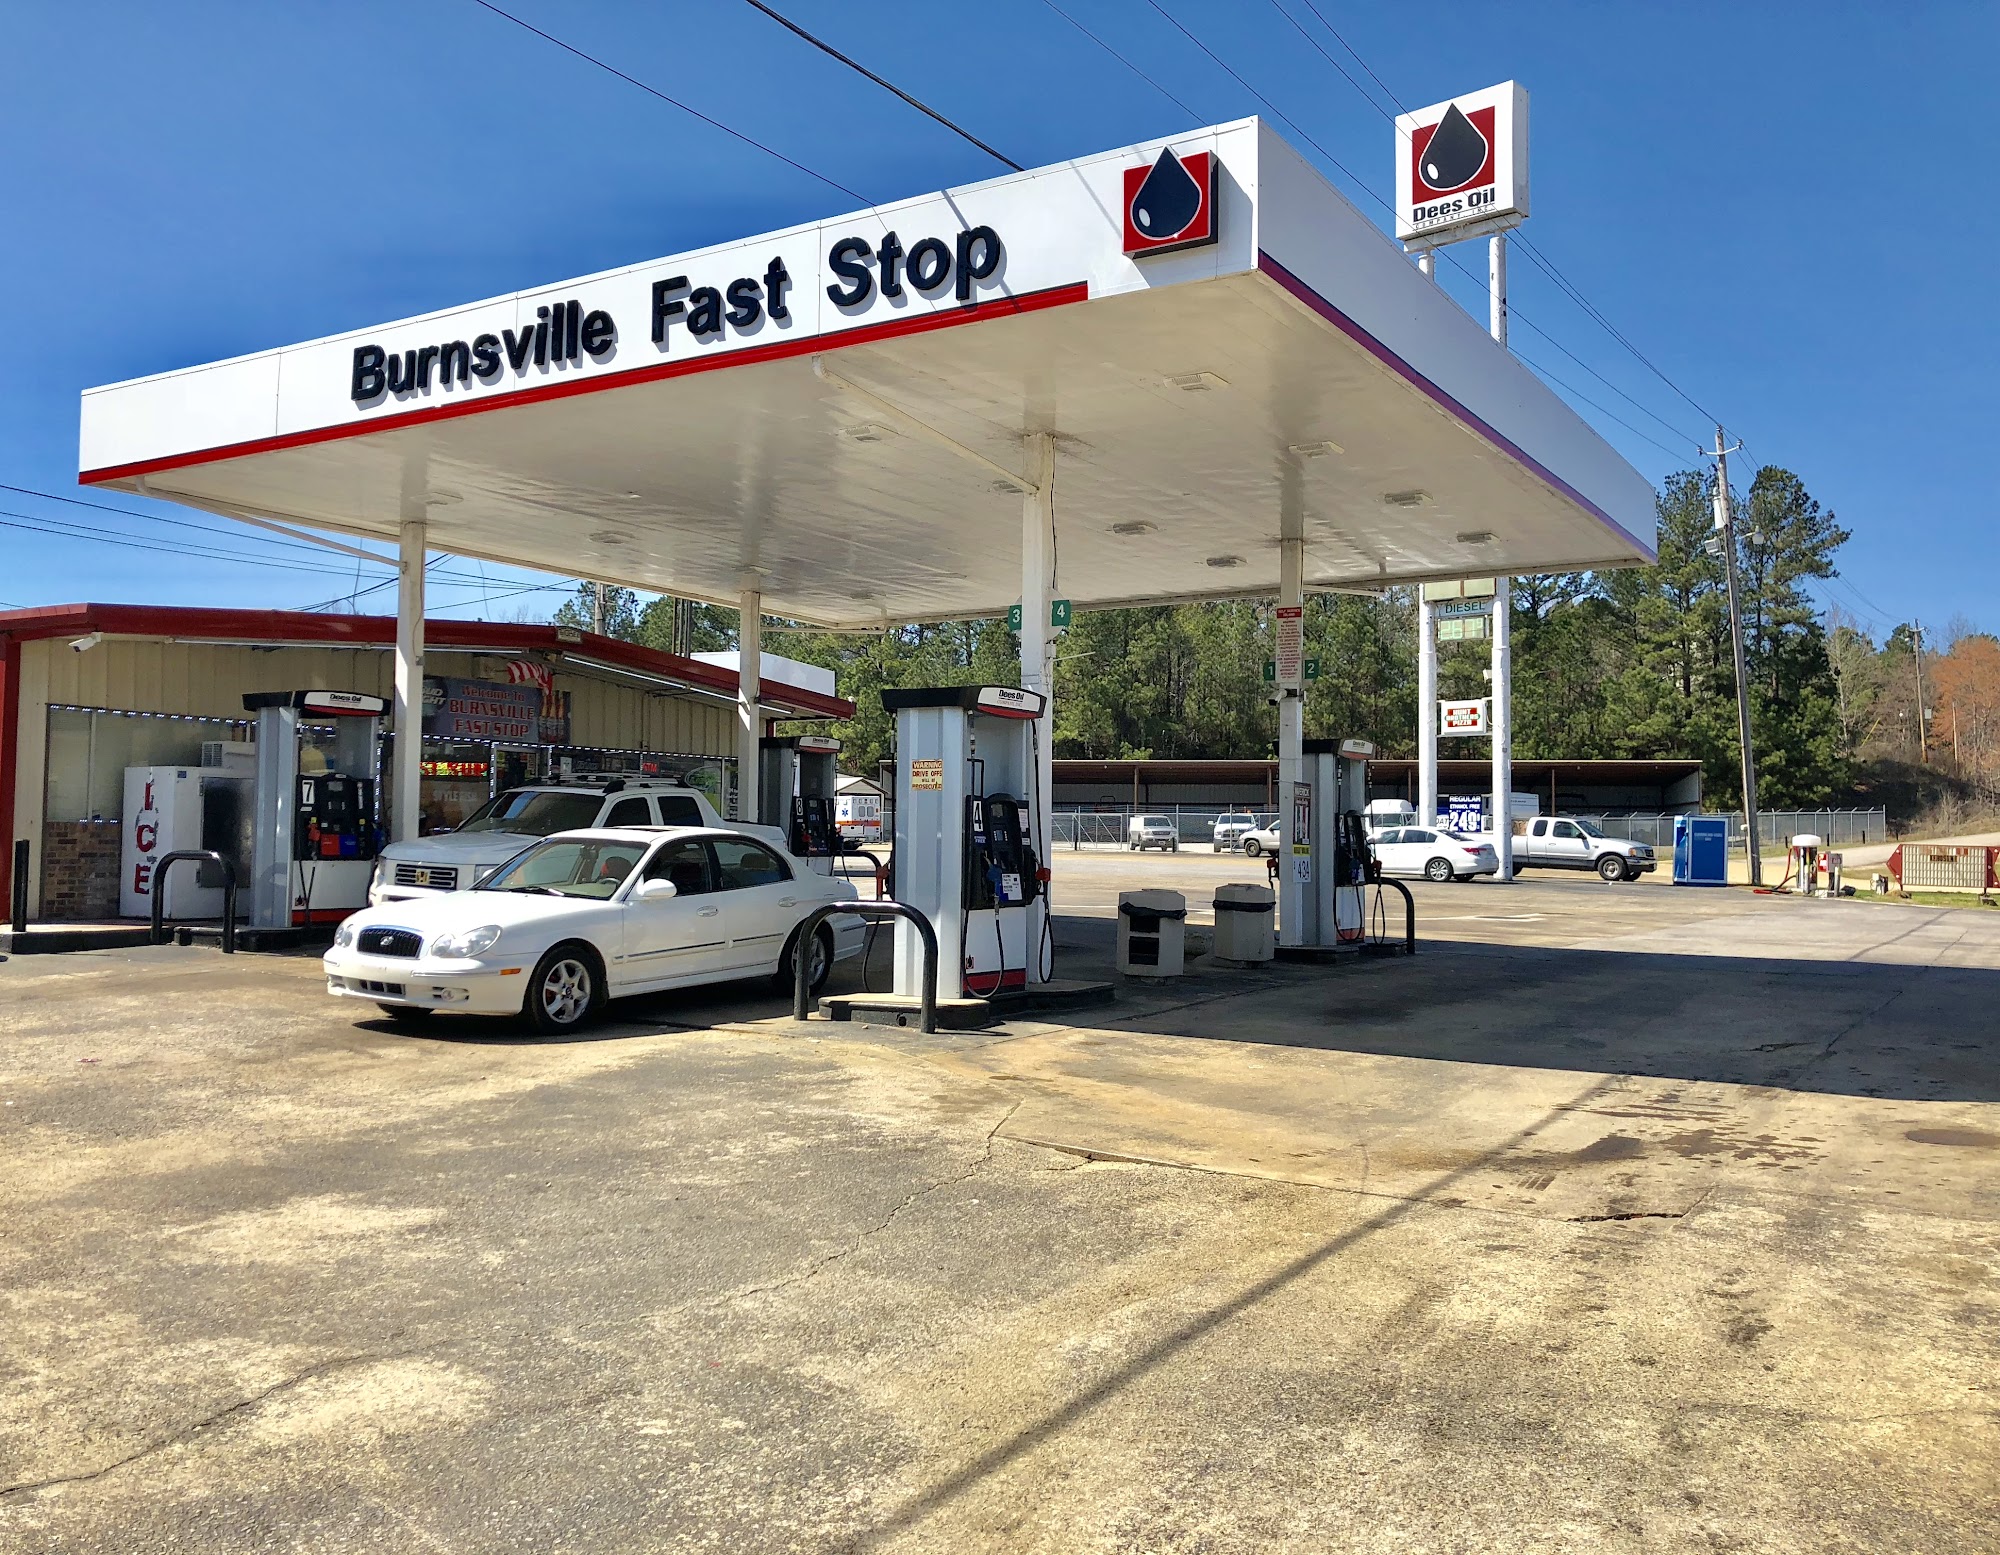 Burnsville Fast Stop